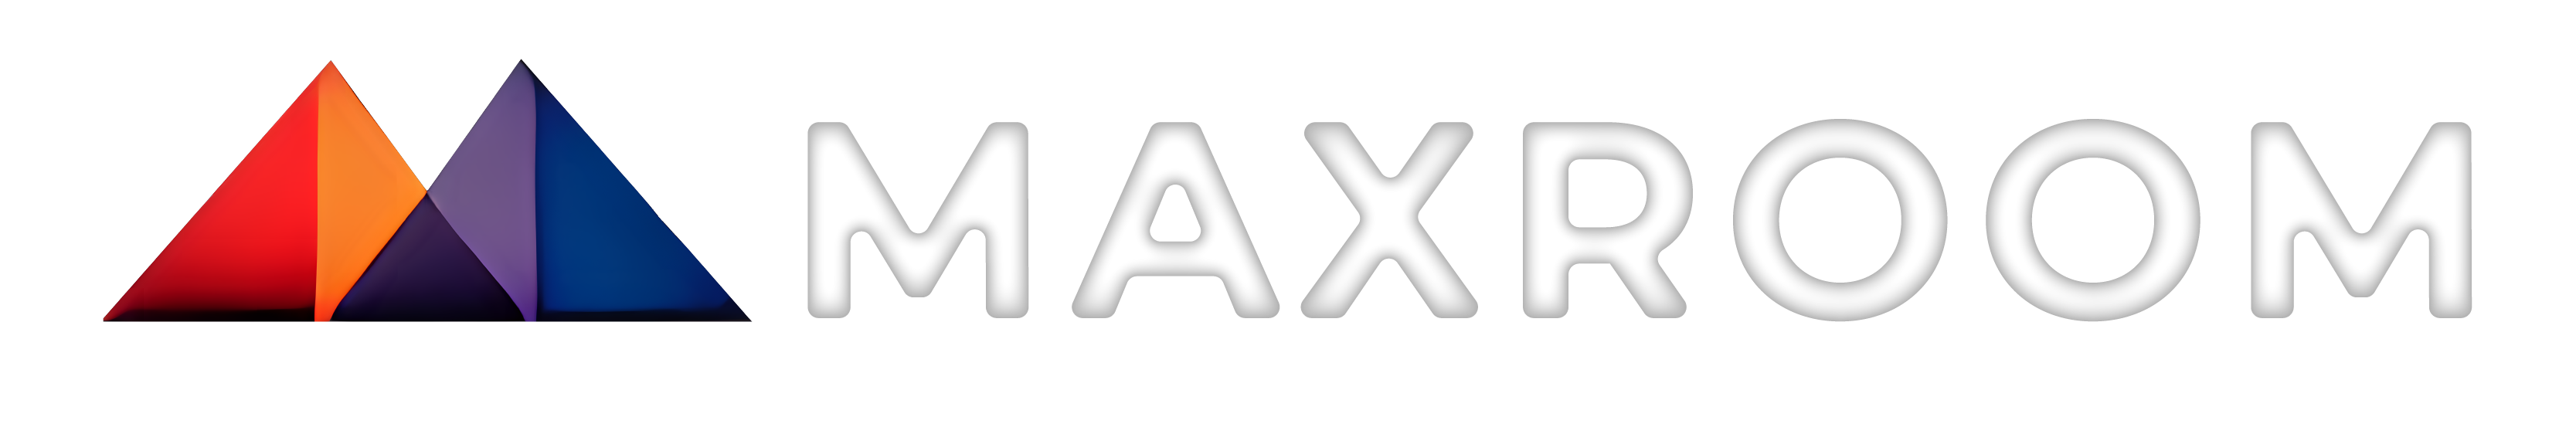 MAXROOM logo